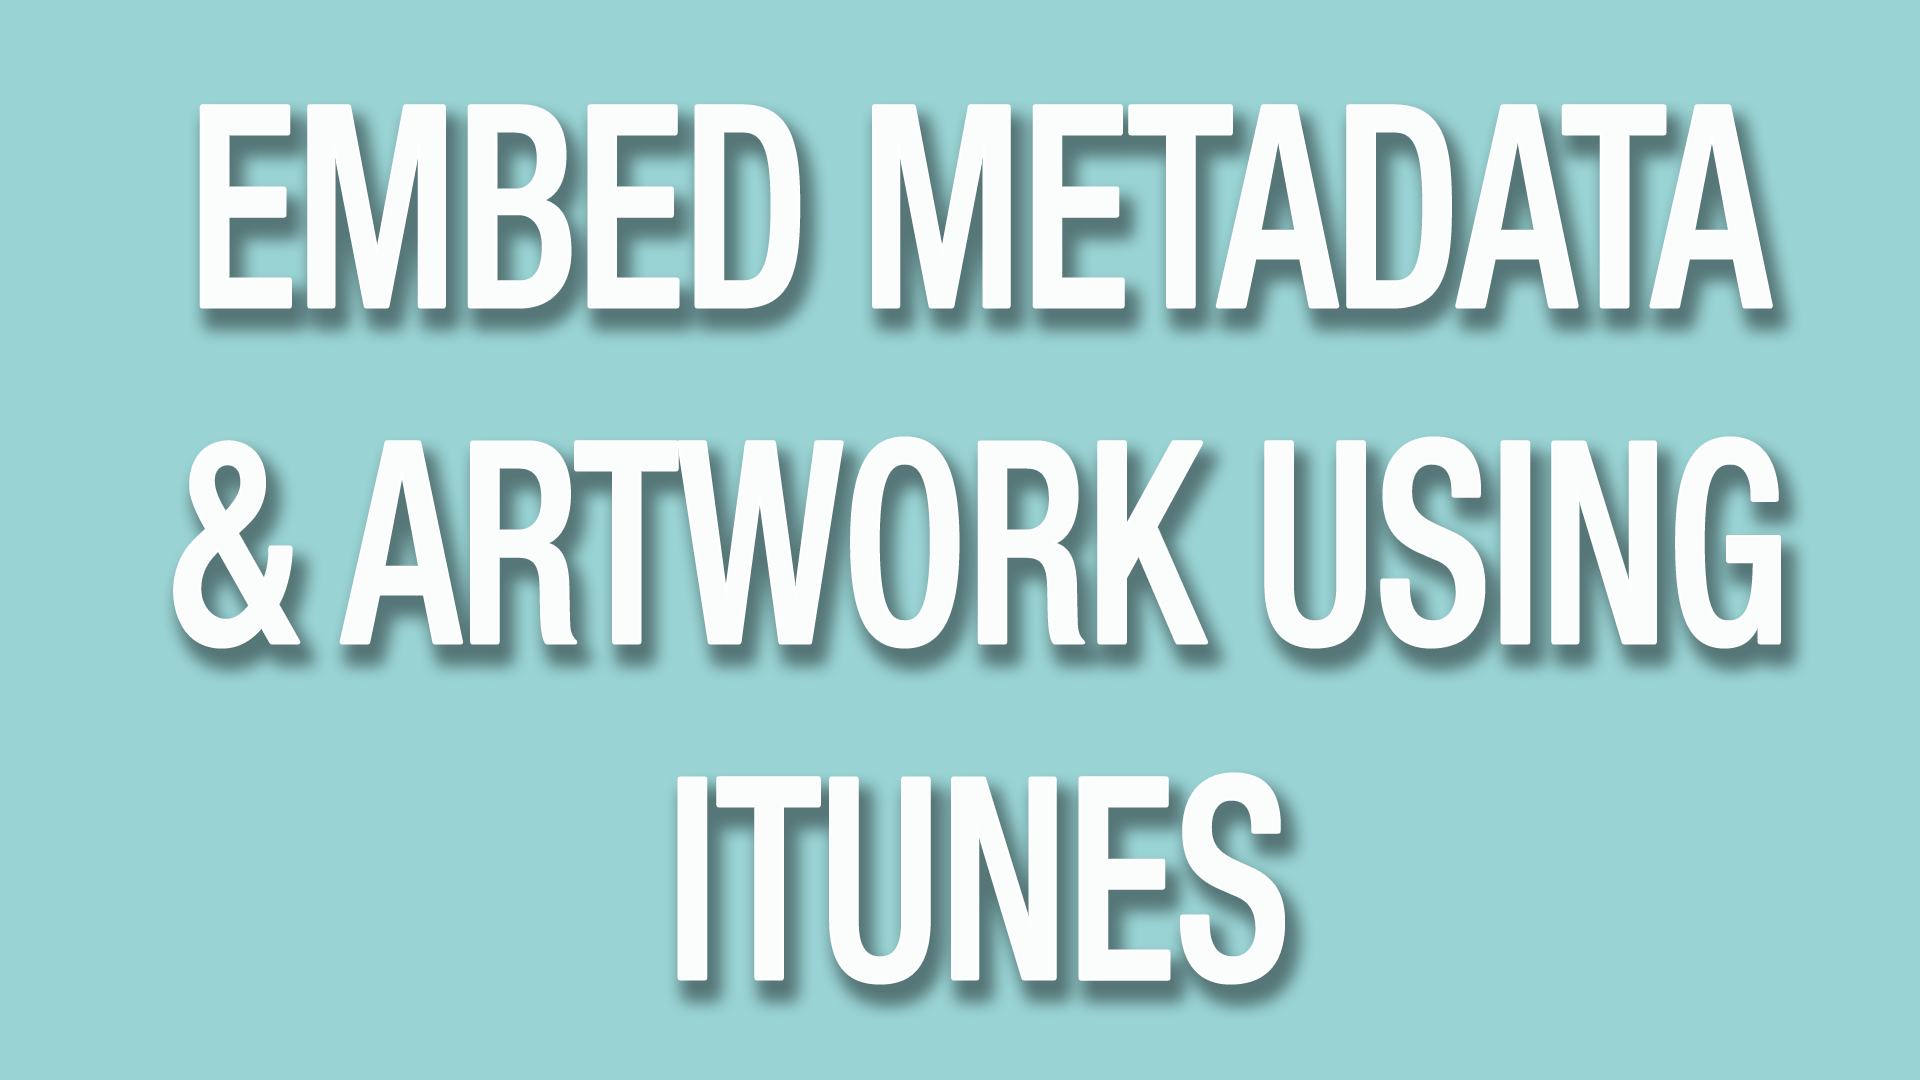 Embed Metadata and Artwork using iTunes